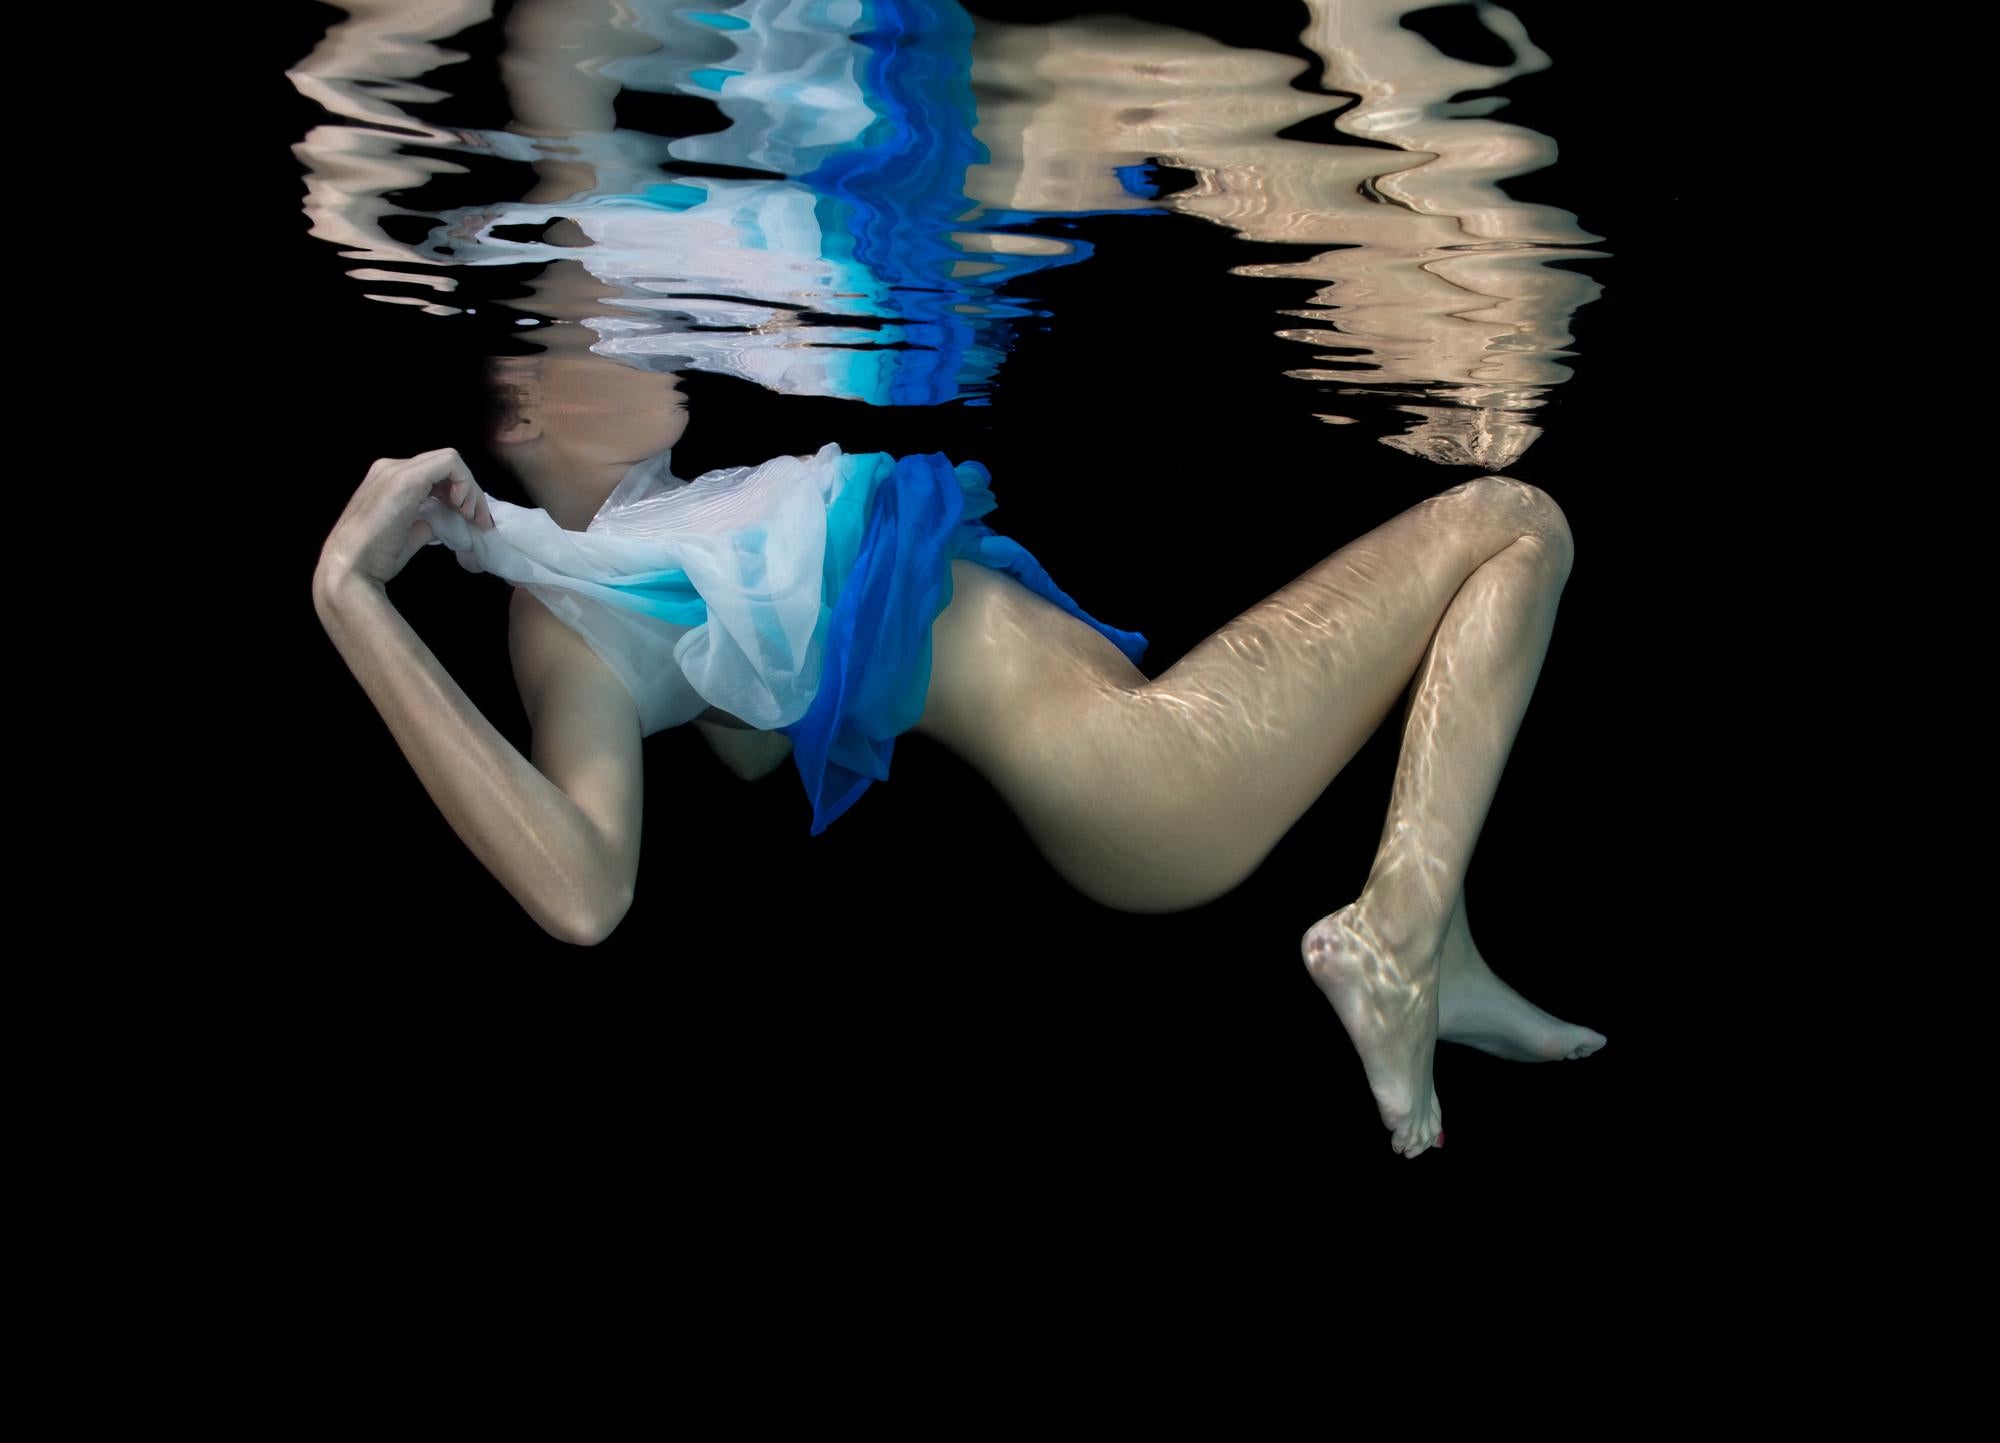 Alex Sher Figurative Photograph - White and Blue - underwater semi-nude photograph - archival pigment 18" x 24"